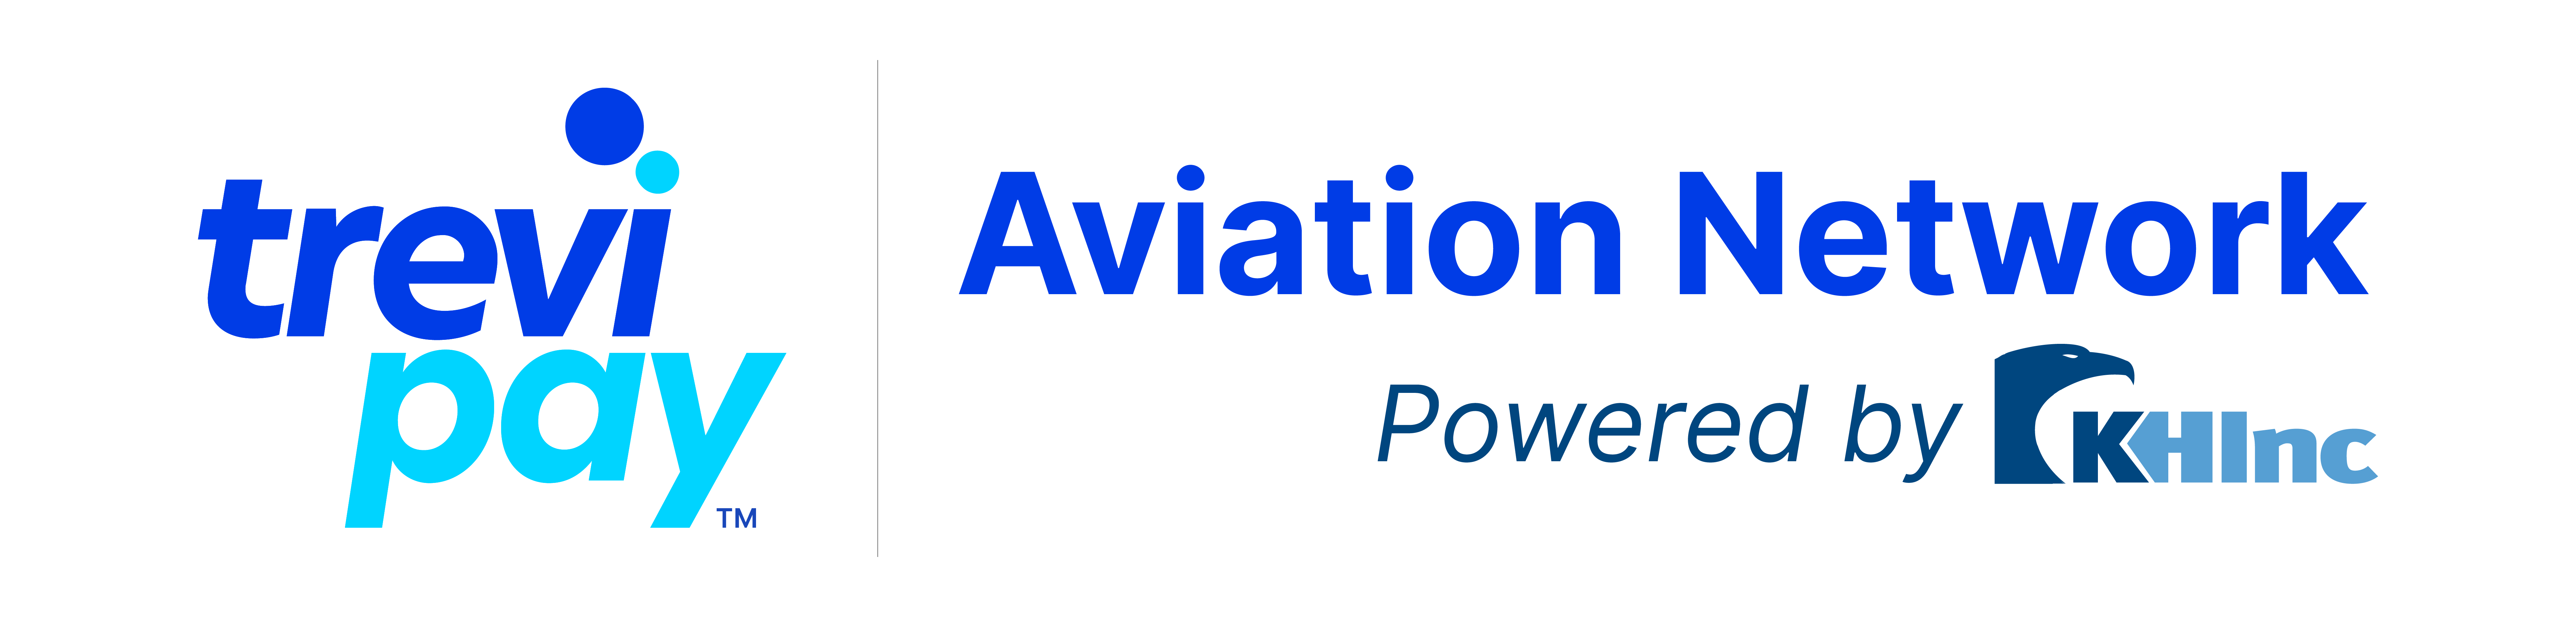 TreviPay Aviation Network Logo KHI